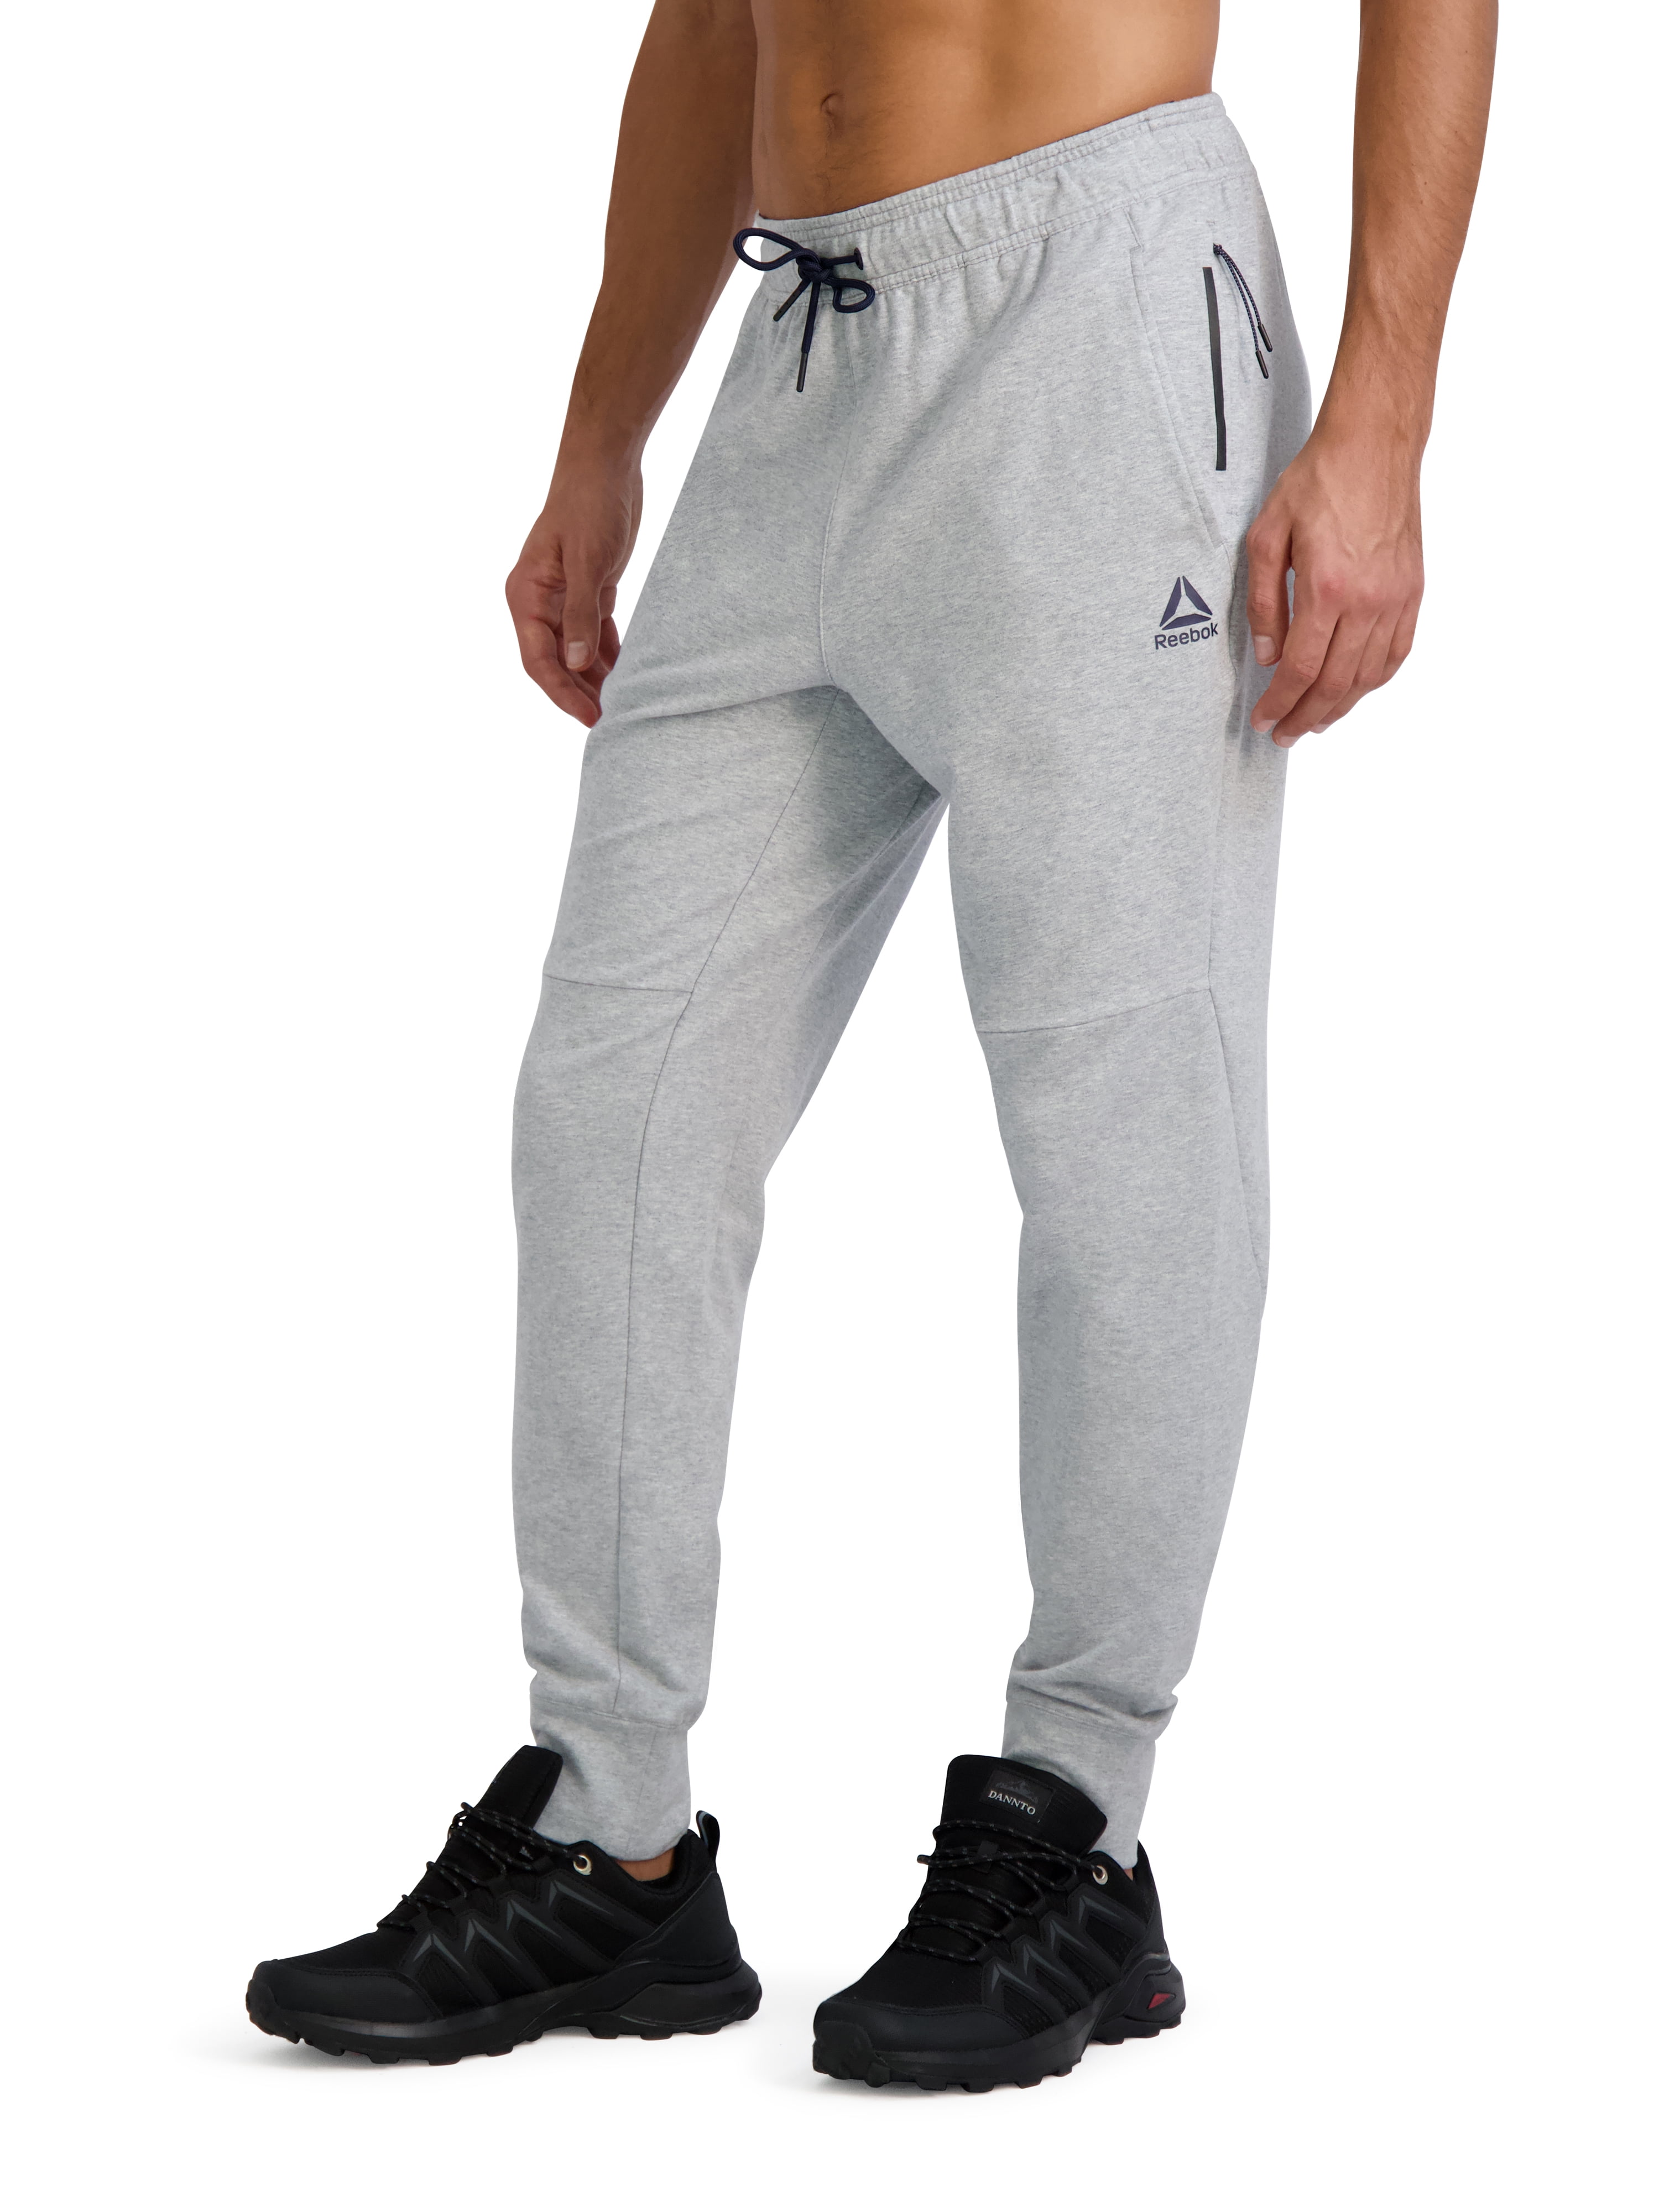 Reebok Men's and Big Men's Fleece Jogger Sweatpants, up to sizes 3XL